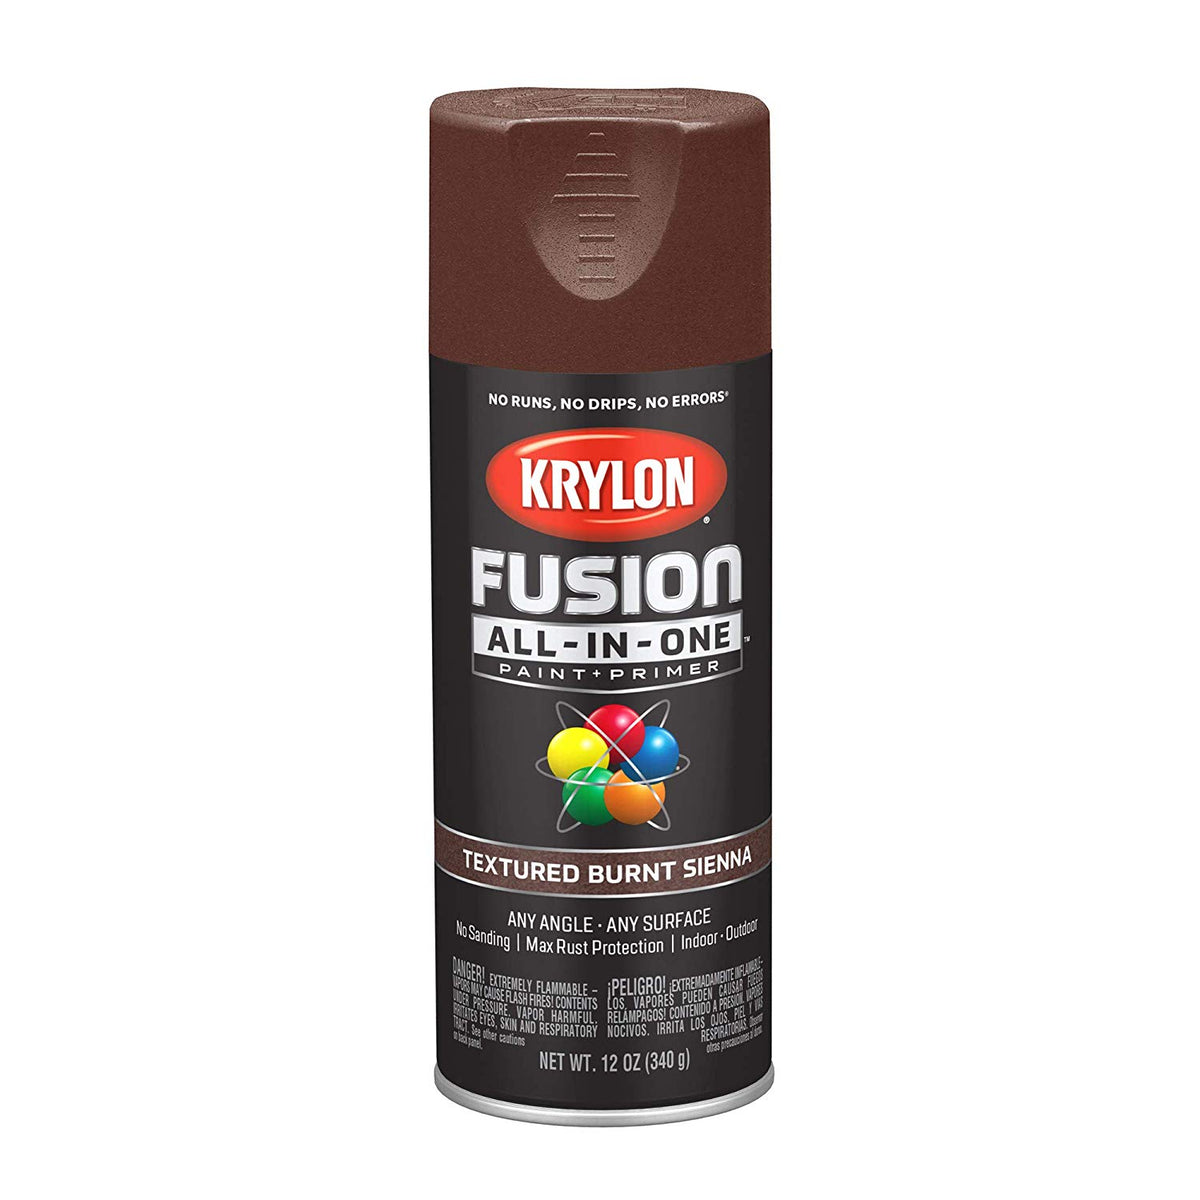 Krylon K02776007 Fusion All-in-One Paint + Primer, Textured Burnt Sienna, 12 Oz